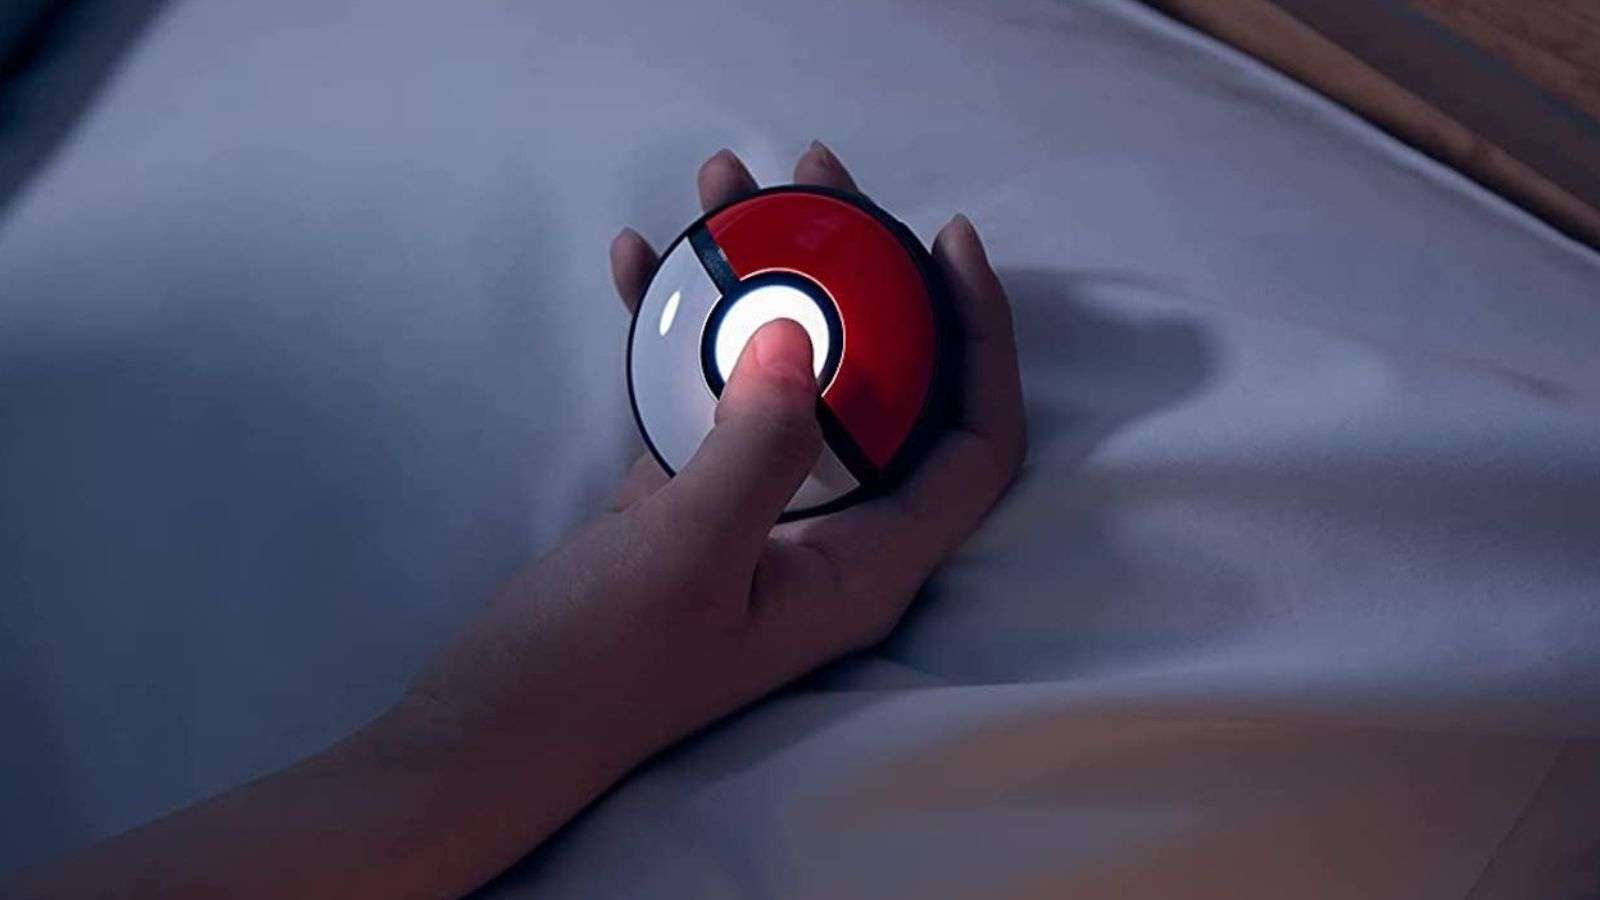 Pokemon Go Plus Sleep tracking in bed